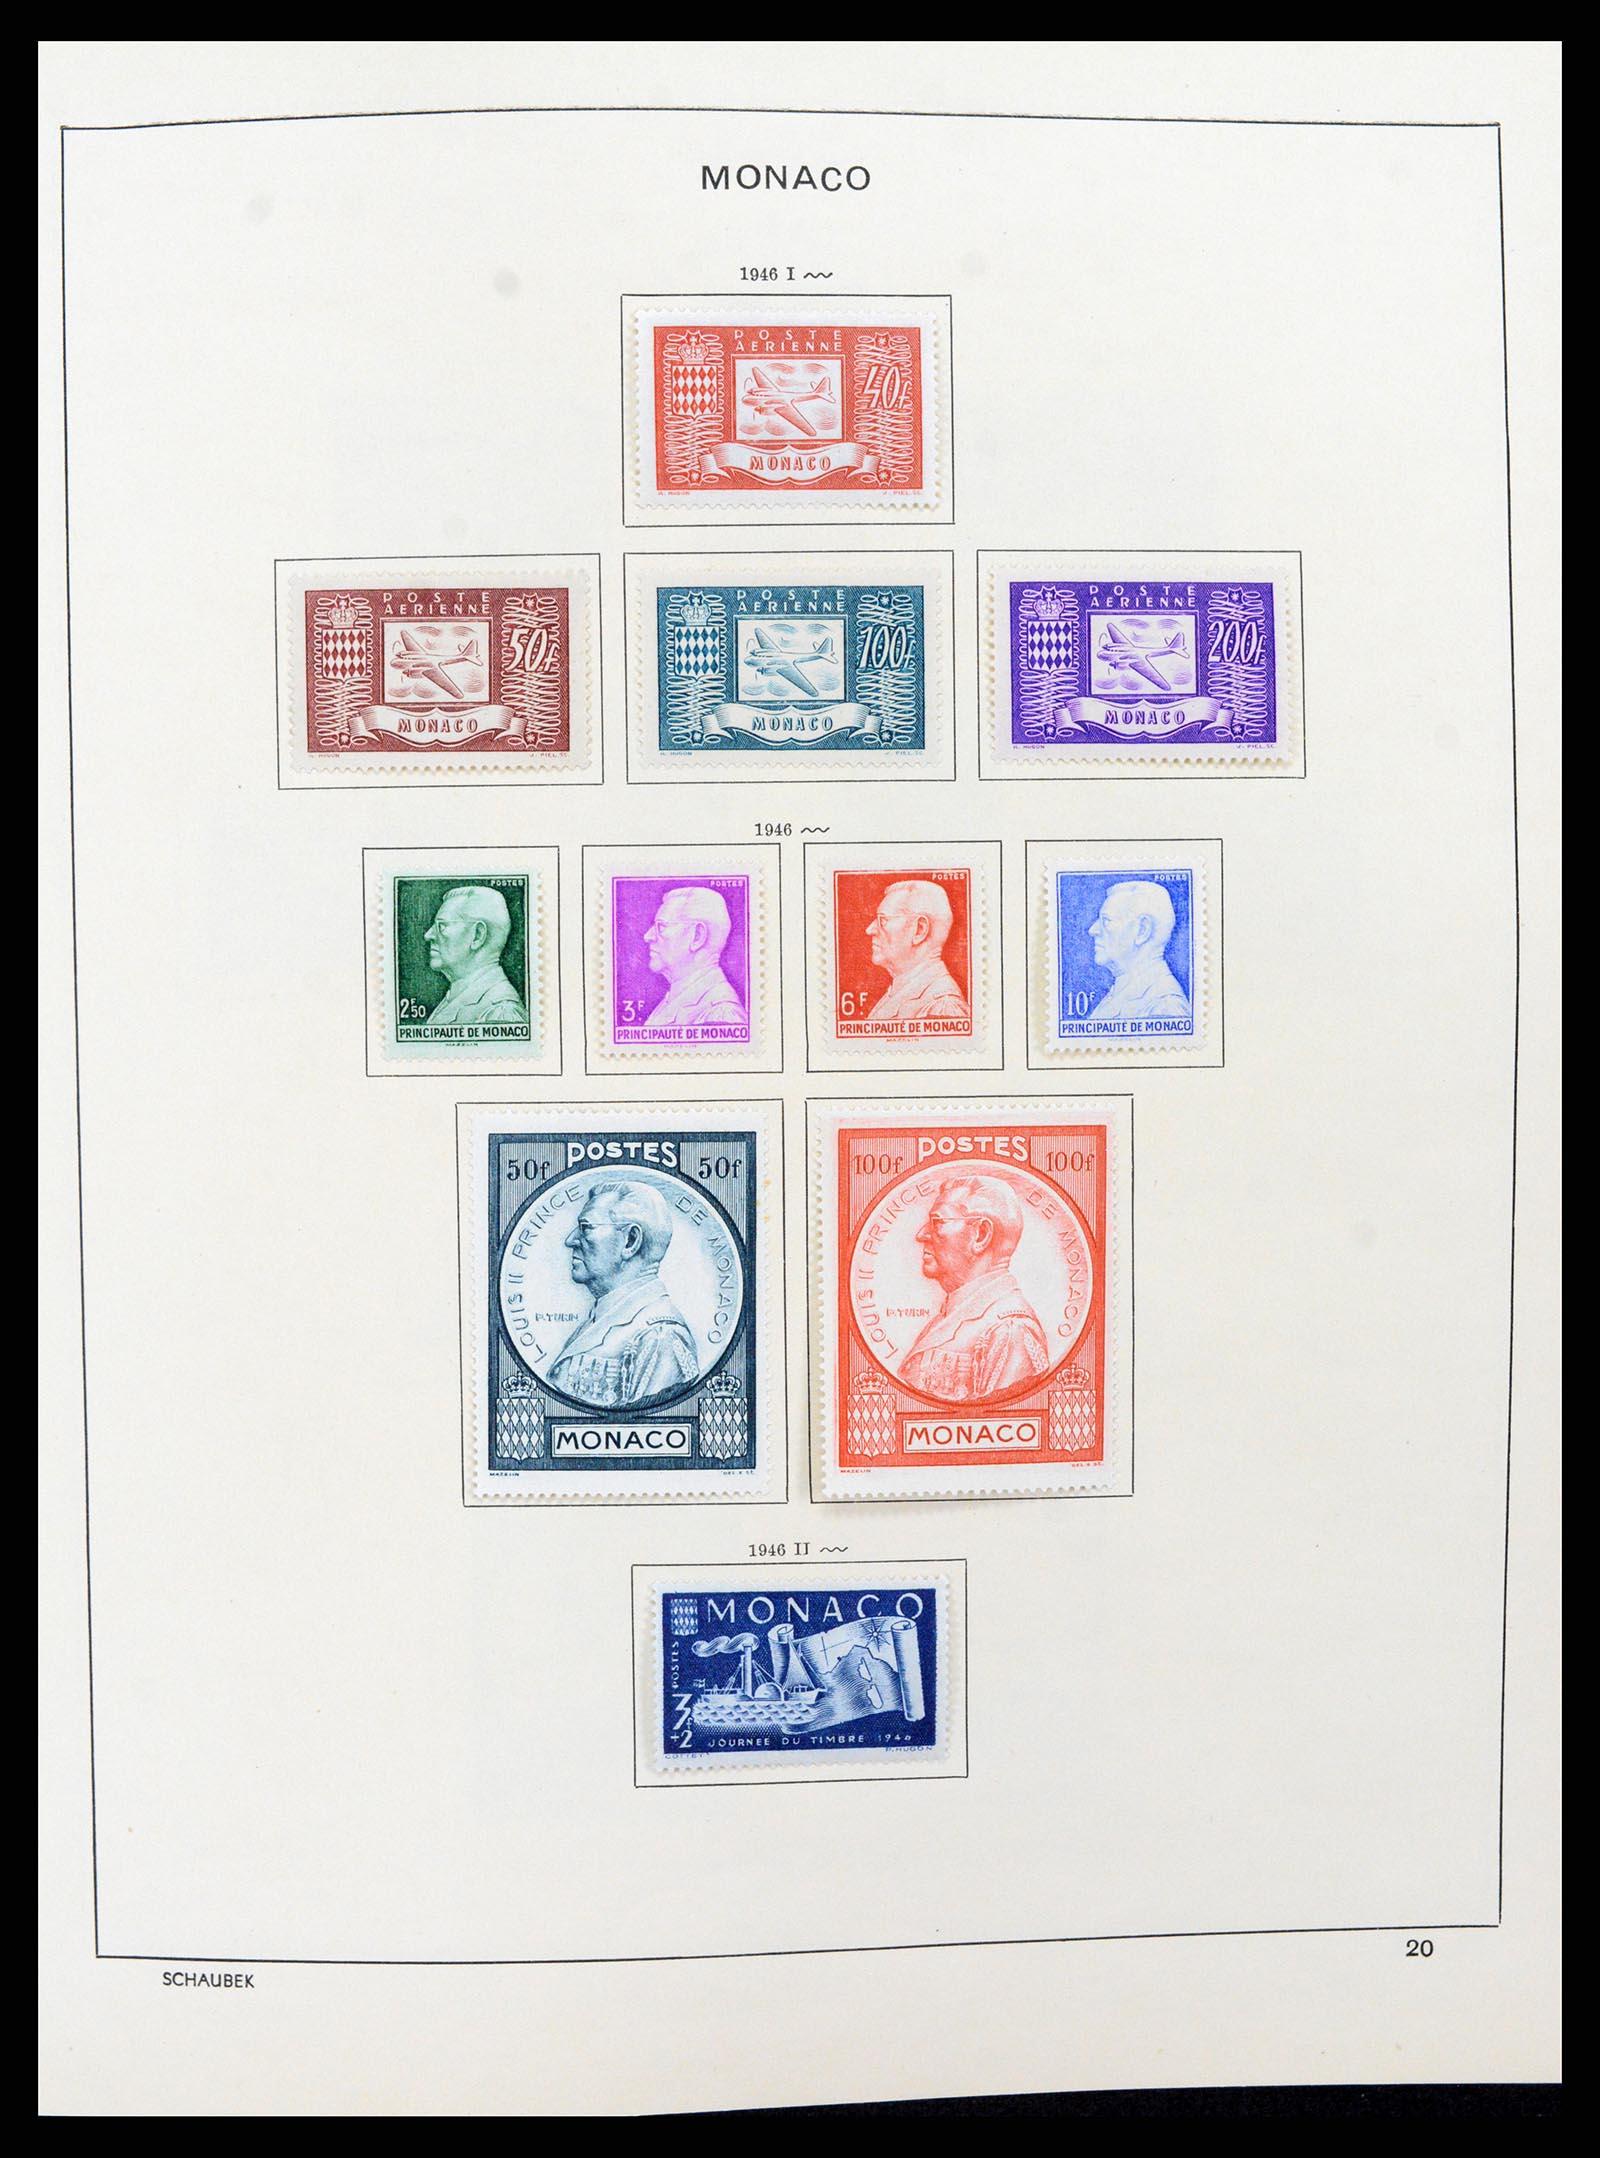 37570 020 - Stamp collection 37570 Monaco 1885-2013.